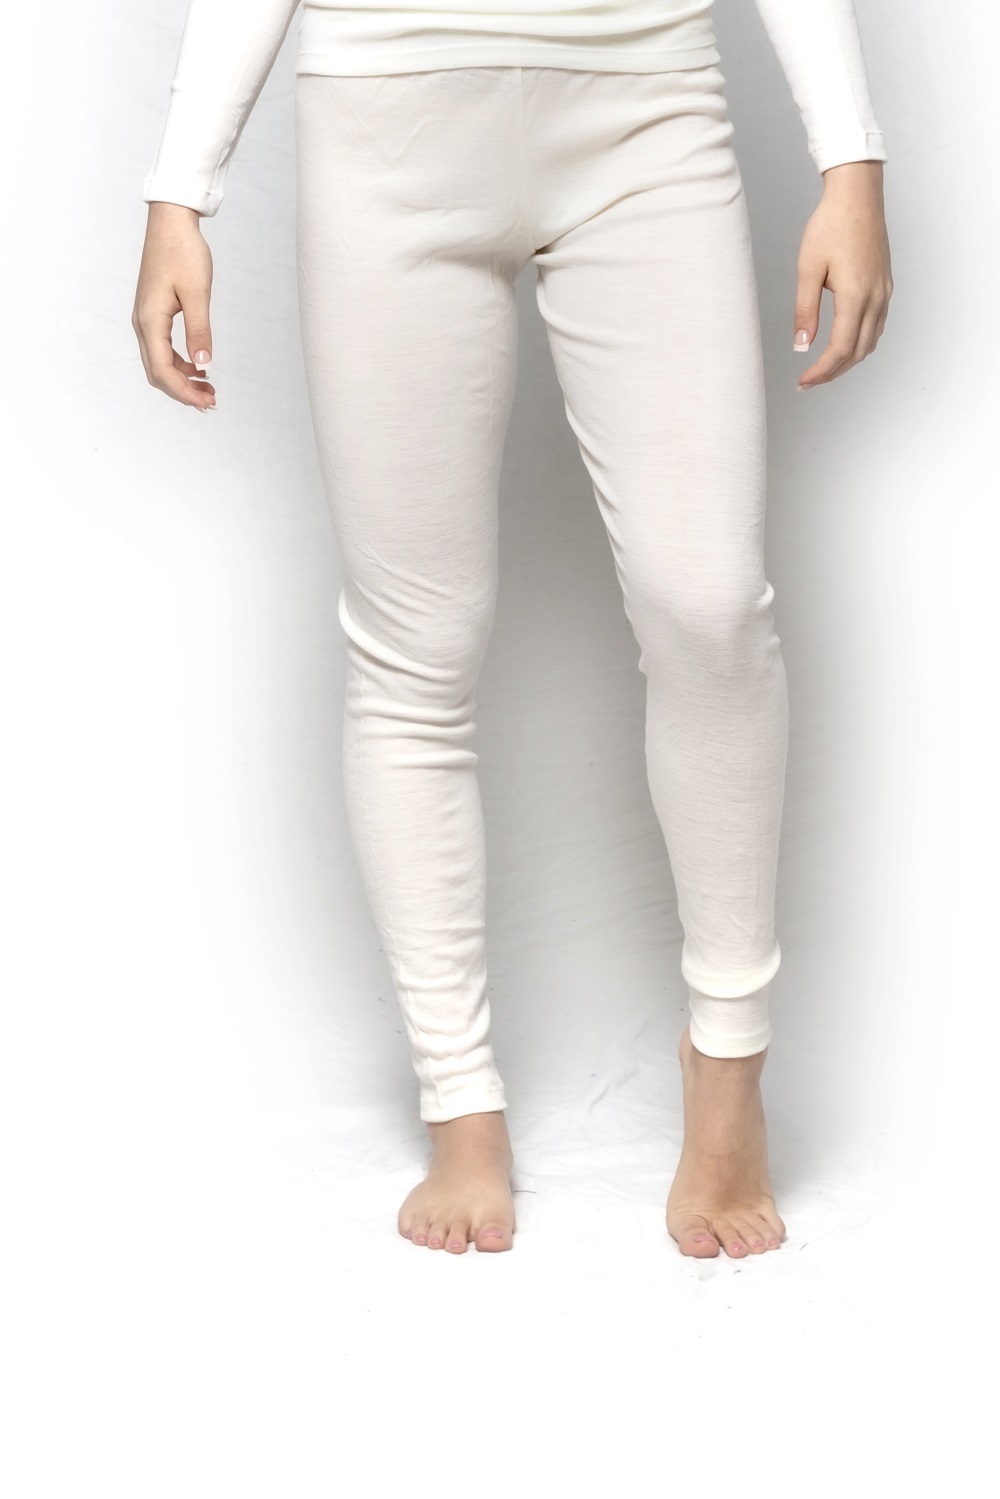 Women's Merino Wool Long Janes Thermal Underwear Layer Thermals Leggings  Pants